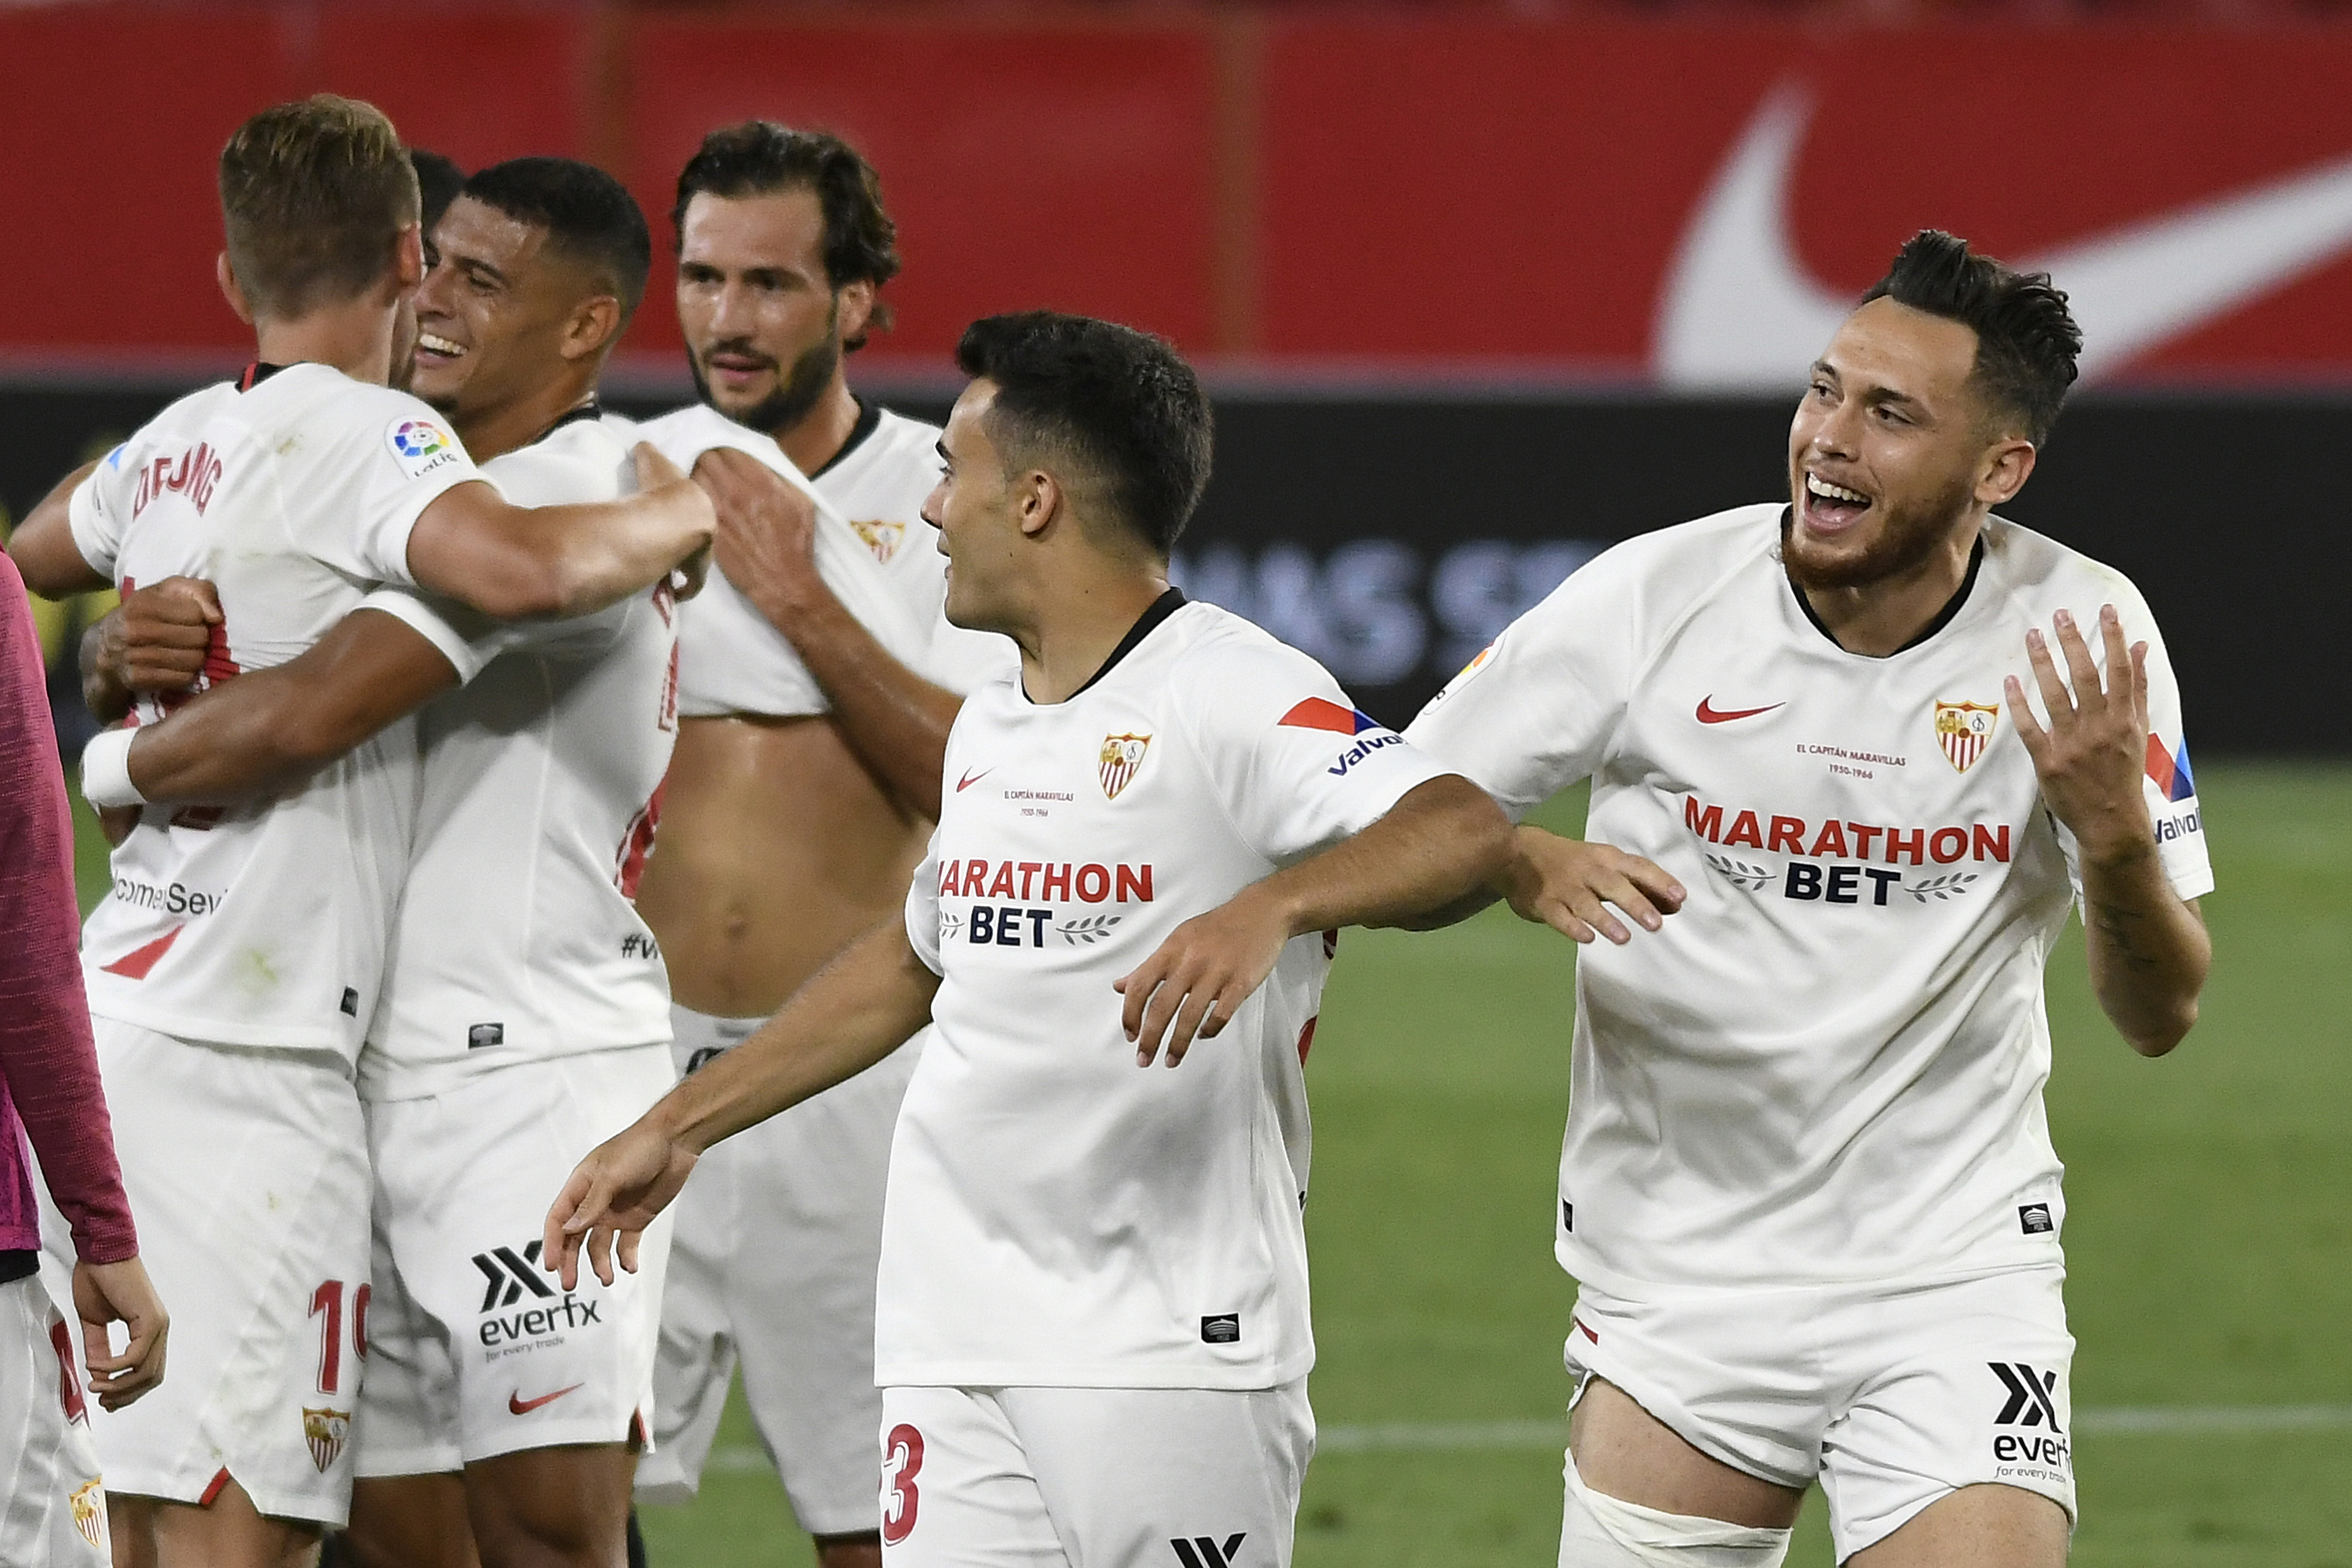 Sevilla FC celebrate